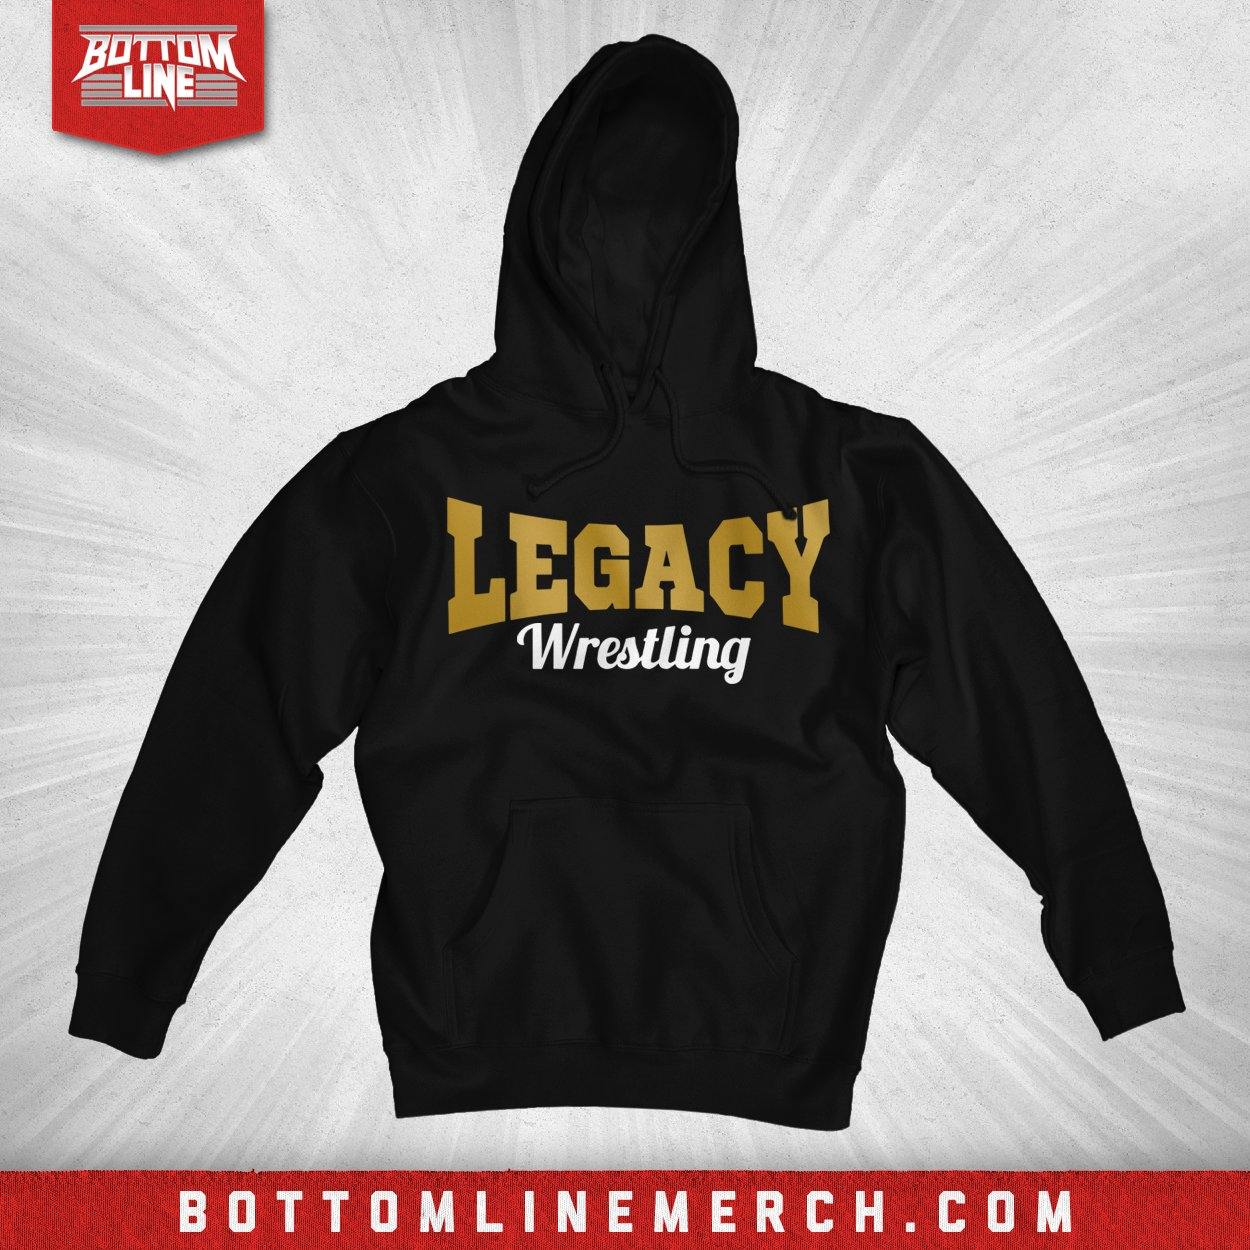 Buy Now – Legacy Wrestling "Warped" Hoodie – Wrestler & Wrestling Merch – Bottom Line